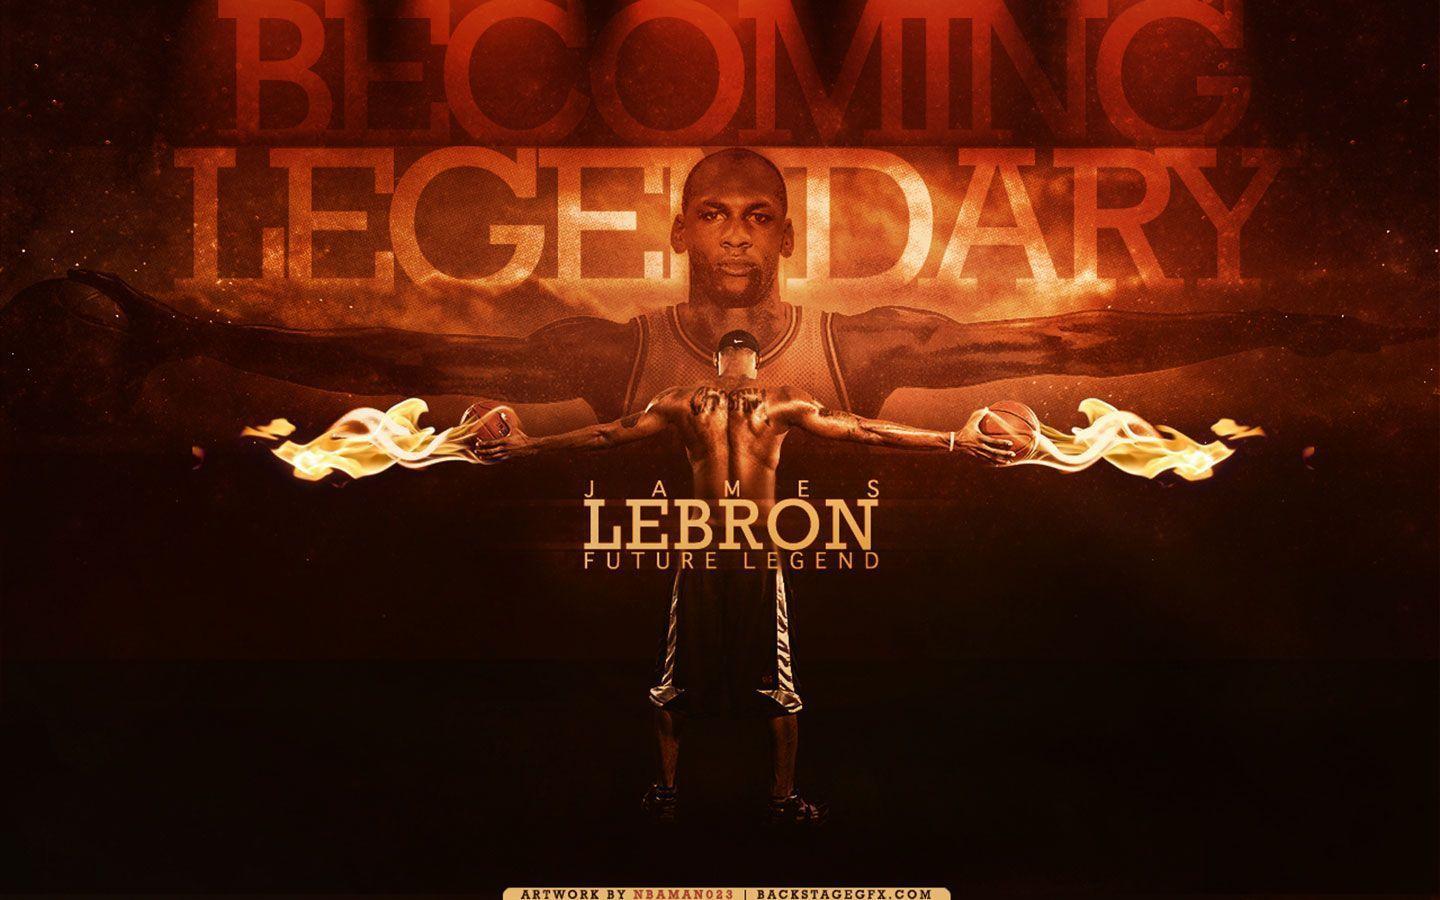 LeBron James Future Legend Widescreen Wallpaper